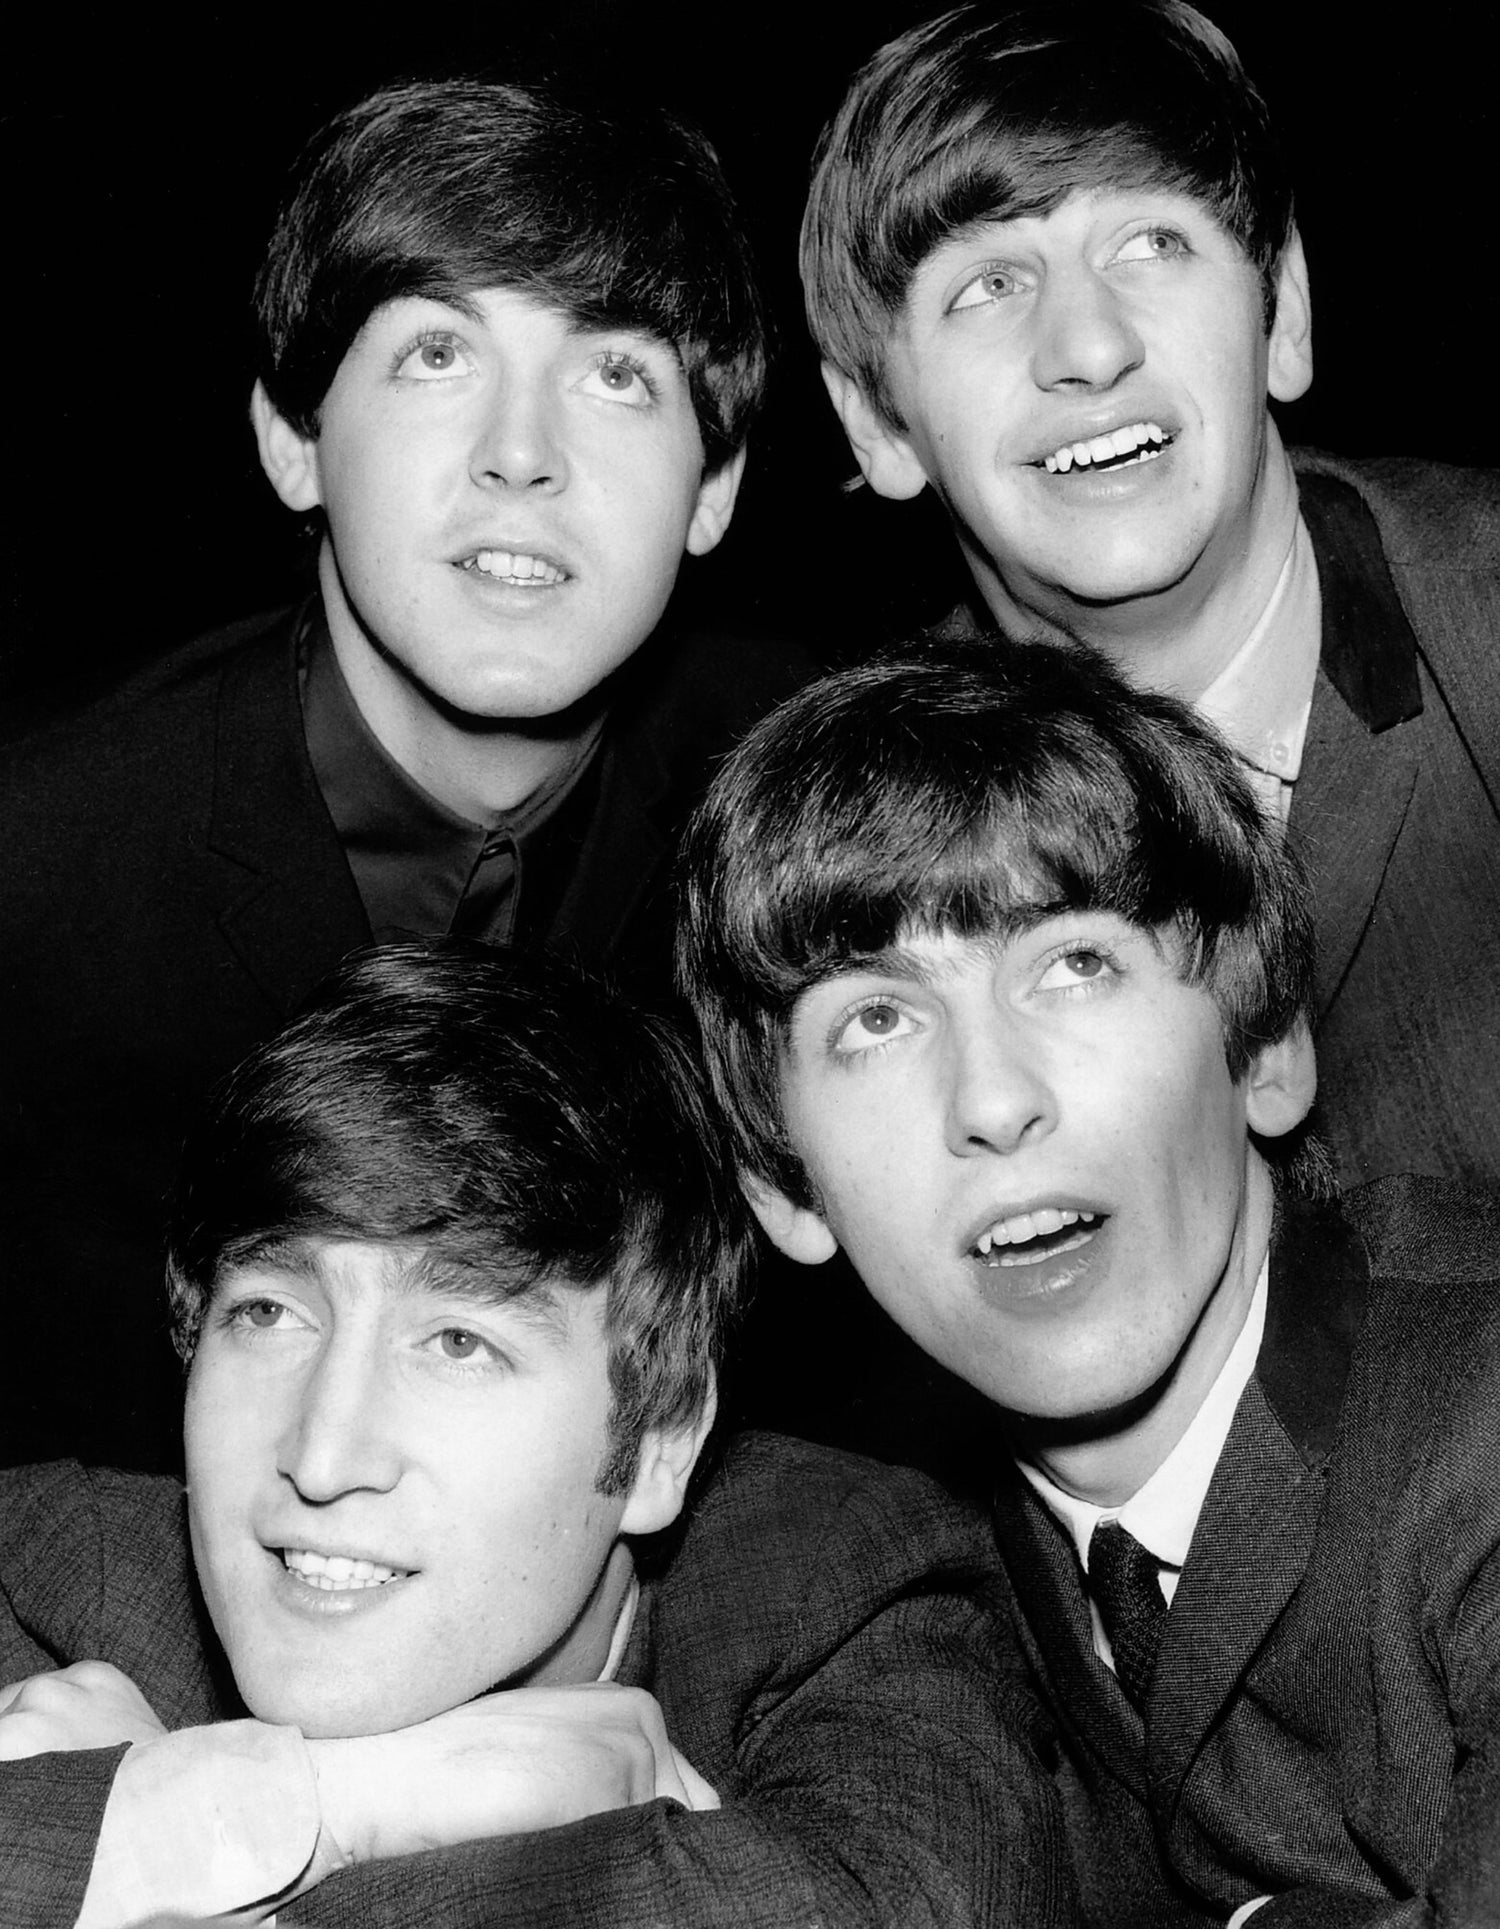 Artist: The Beatles